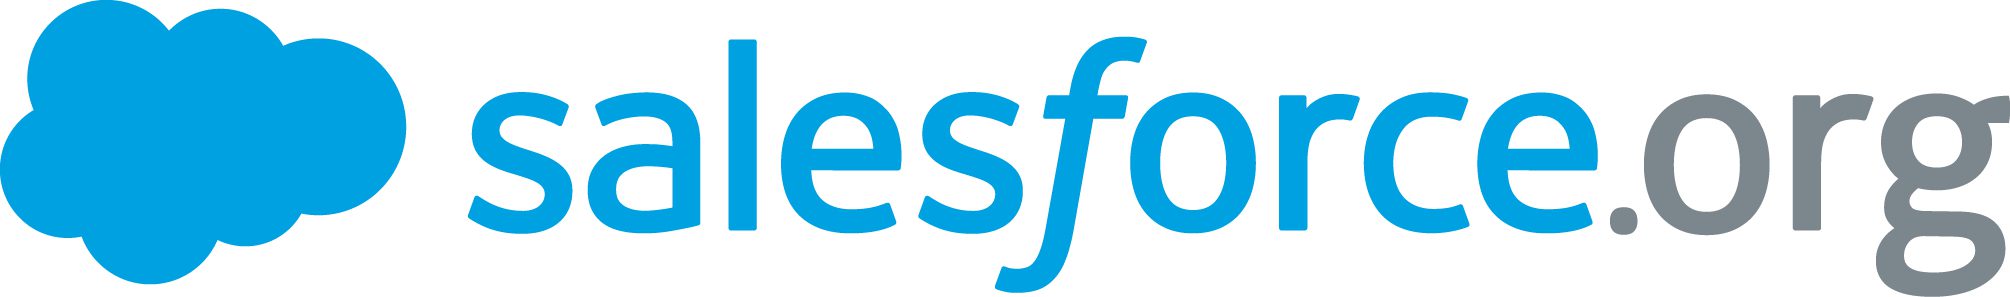 Salesforce.org - logo